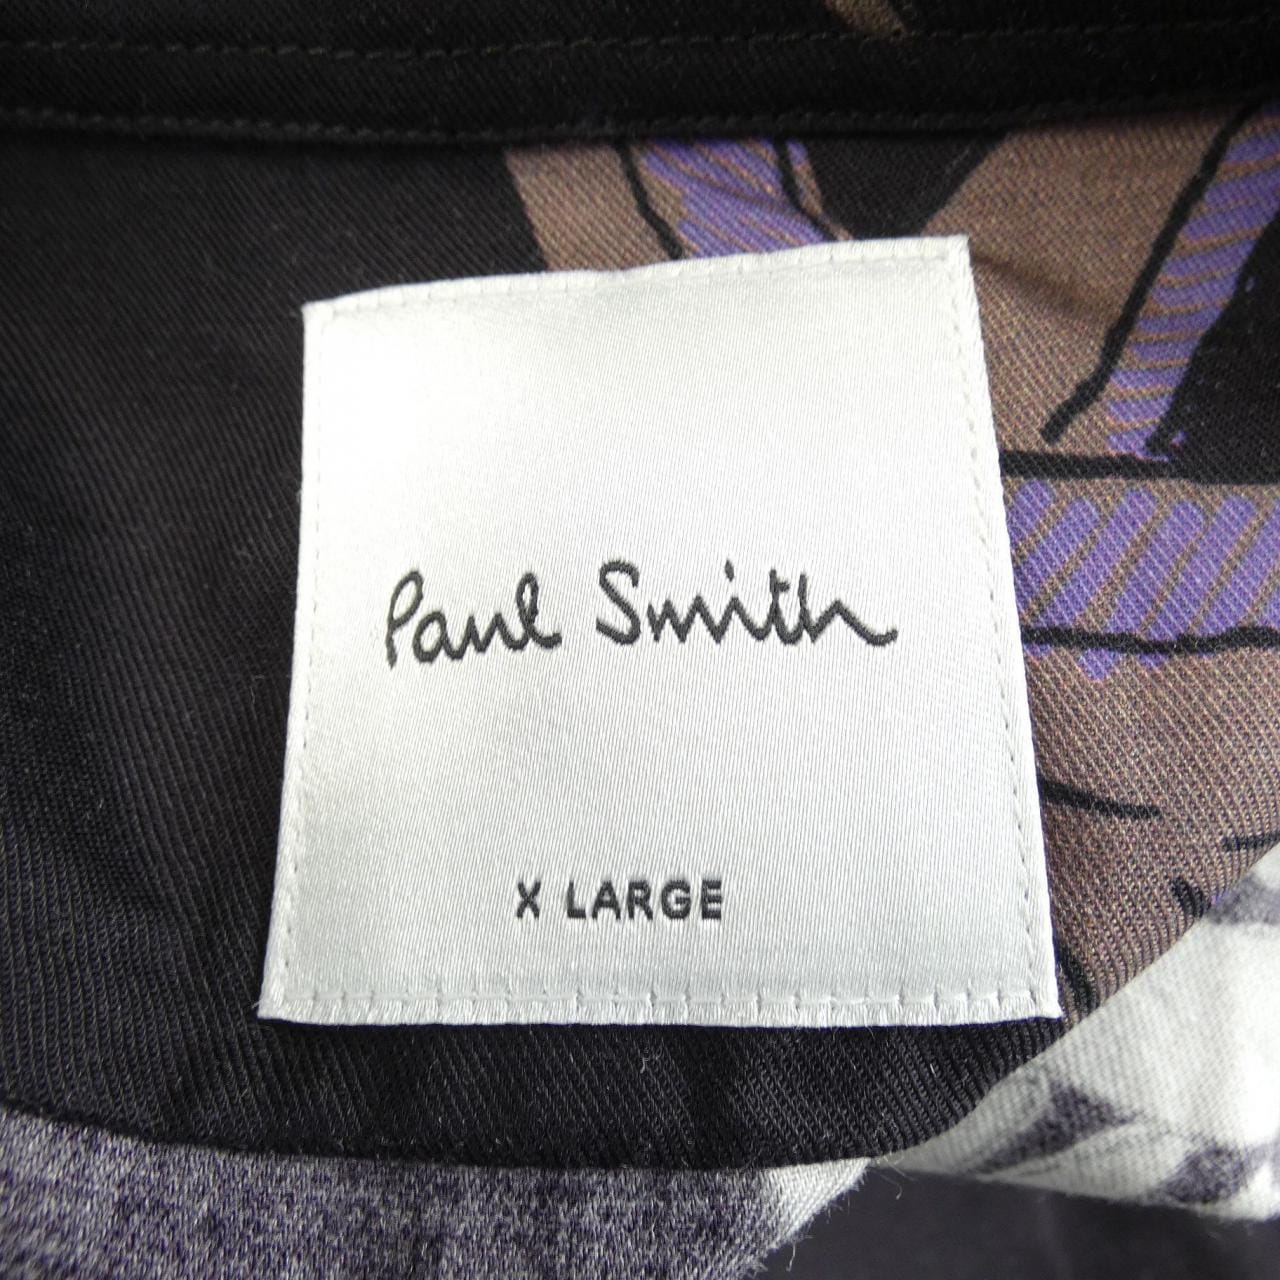 Paul Smith shirt